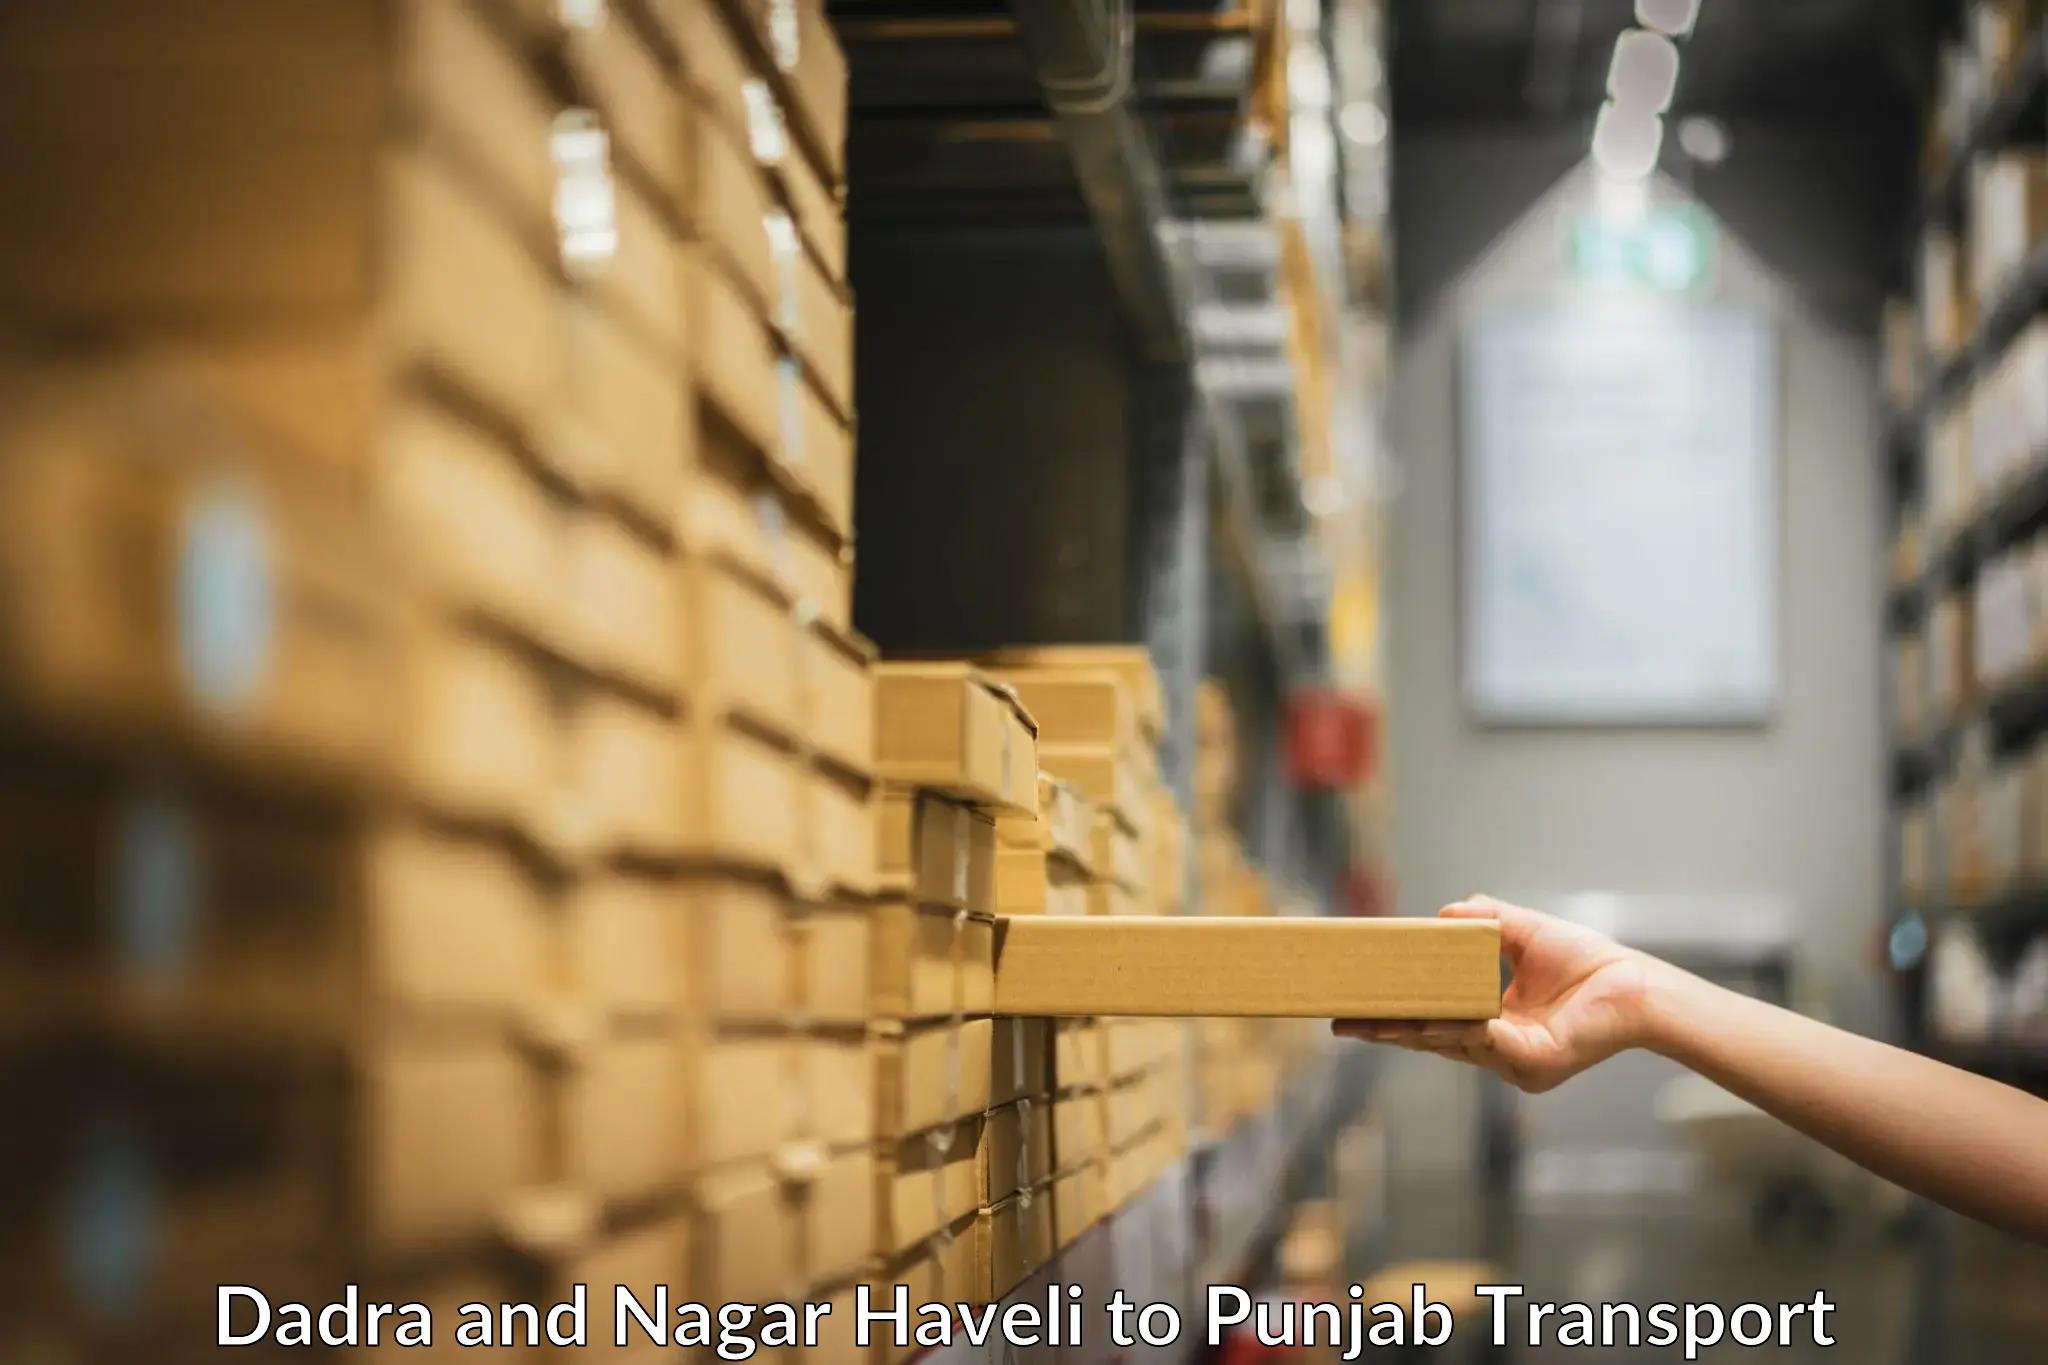 Furniture transport service Dadra and Nagar Haveli to Rupnagar